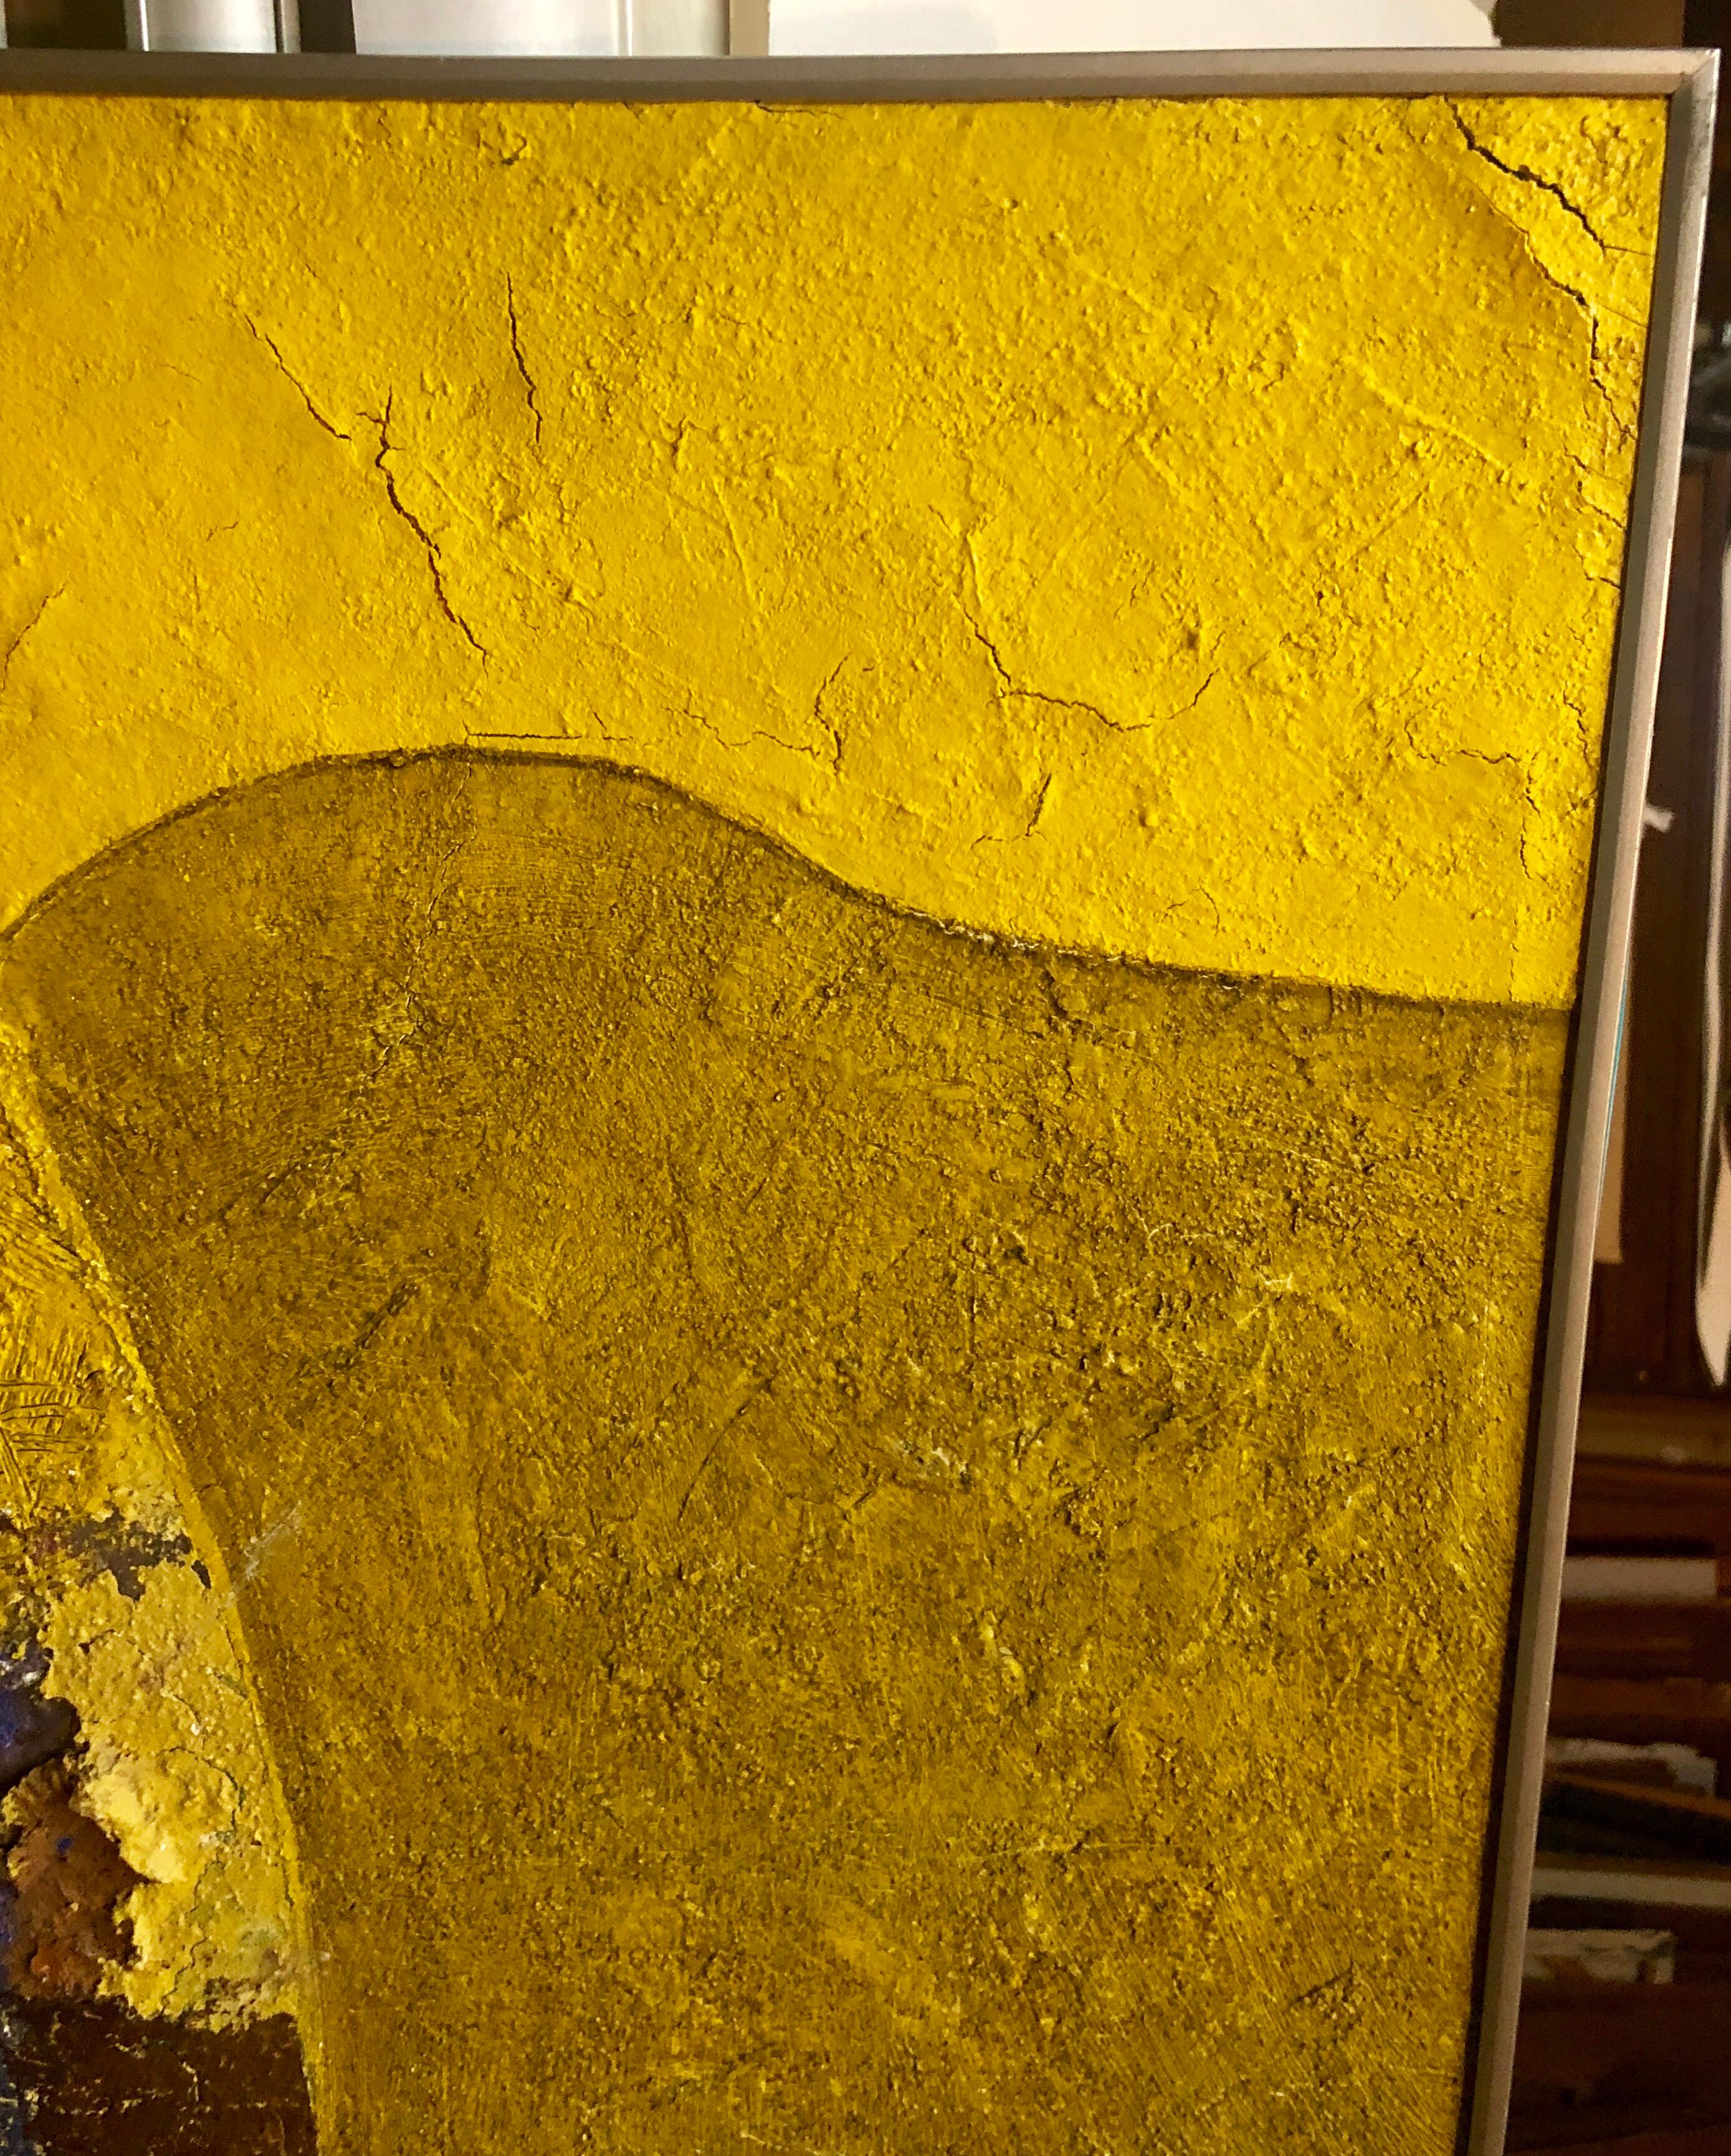 PAJARO AMARILLO, The Yellow Bird. Latin American Mixed Media Painting 4